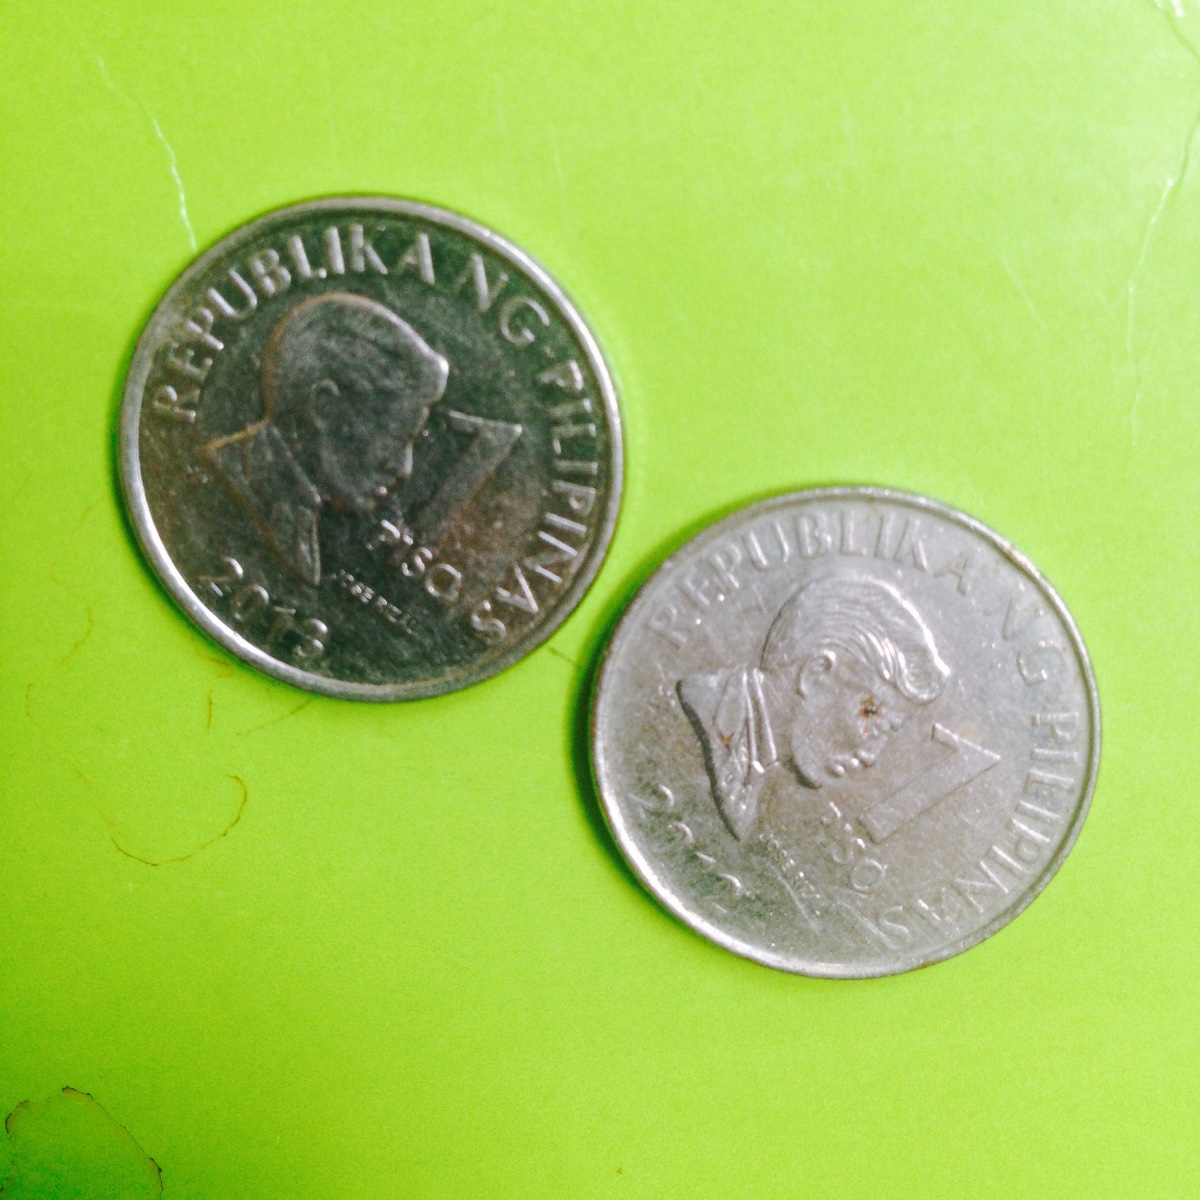 Two pesos